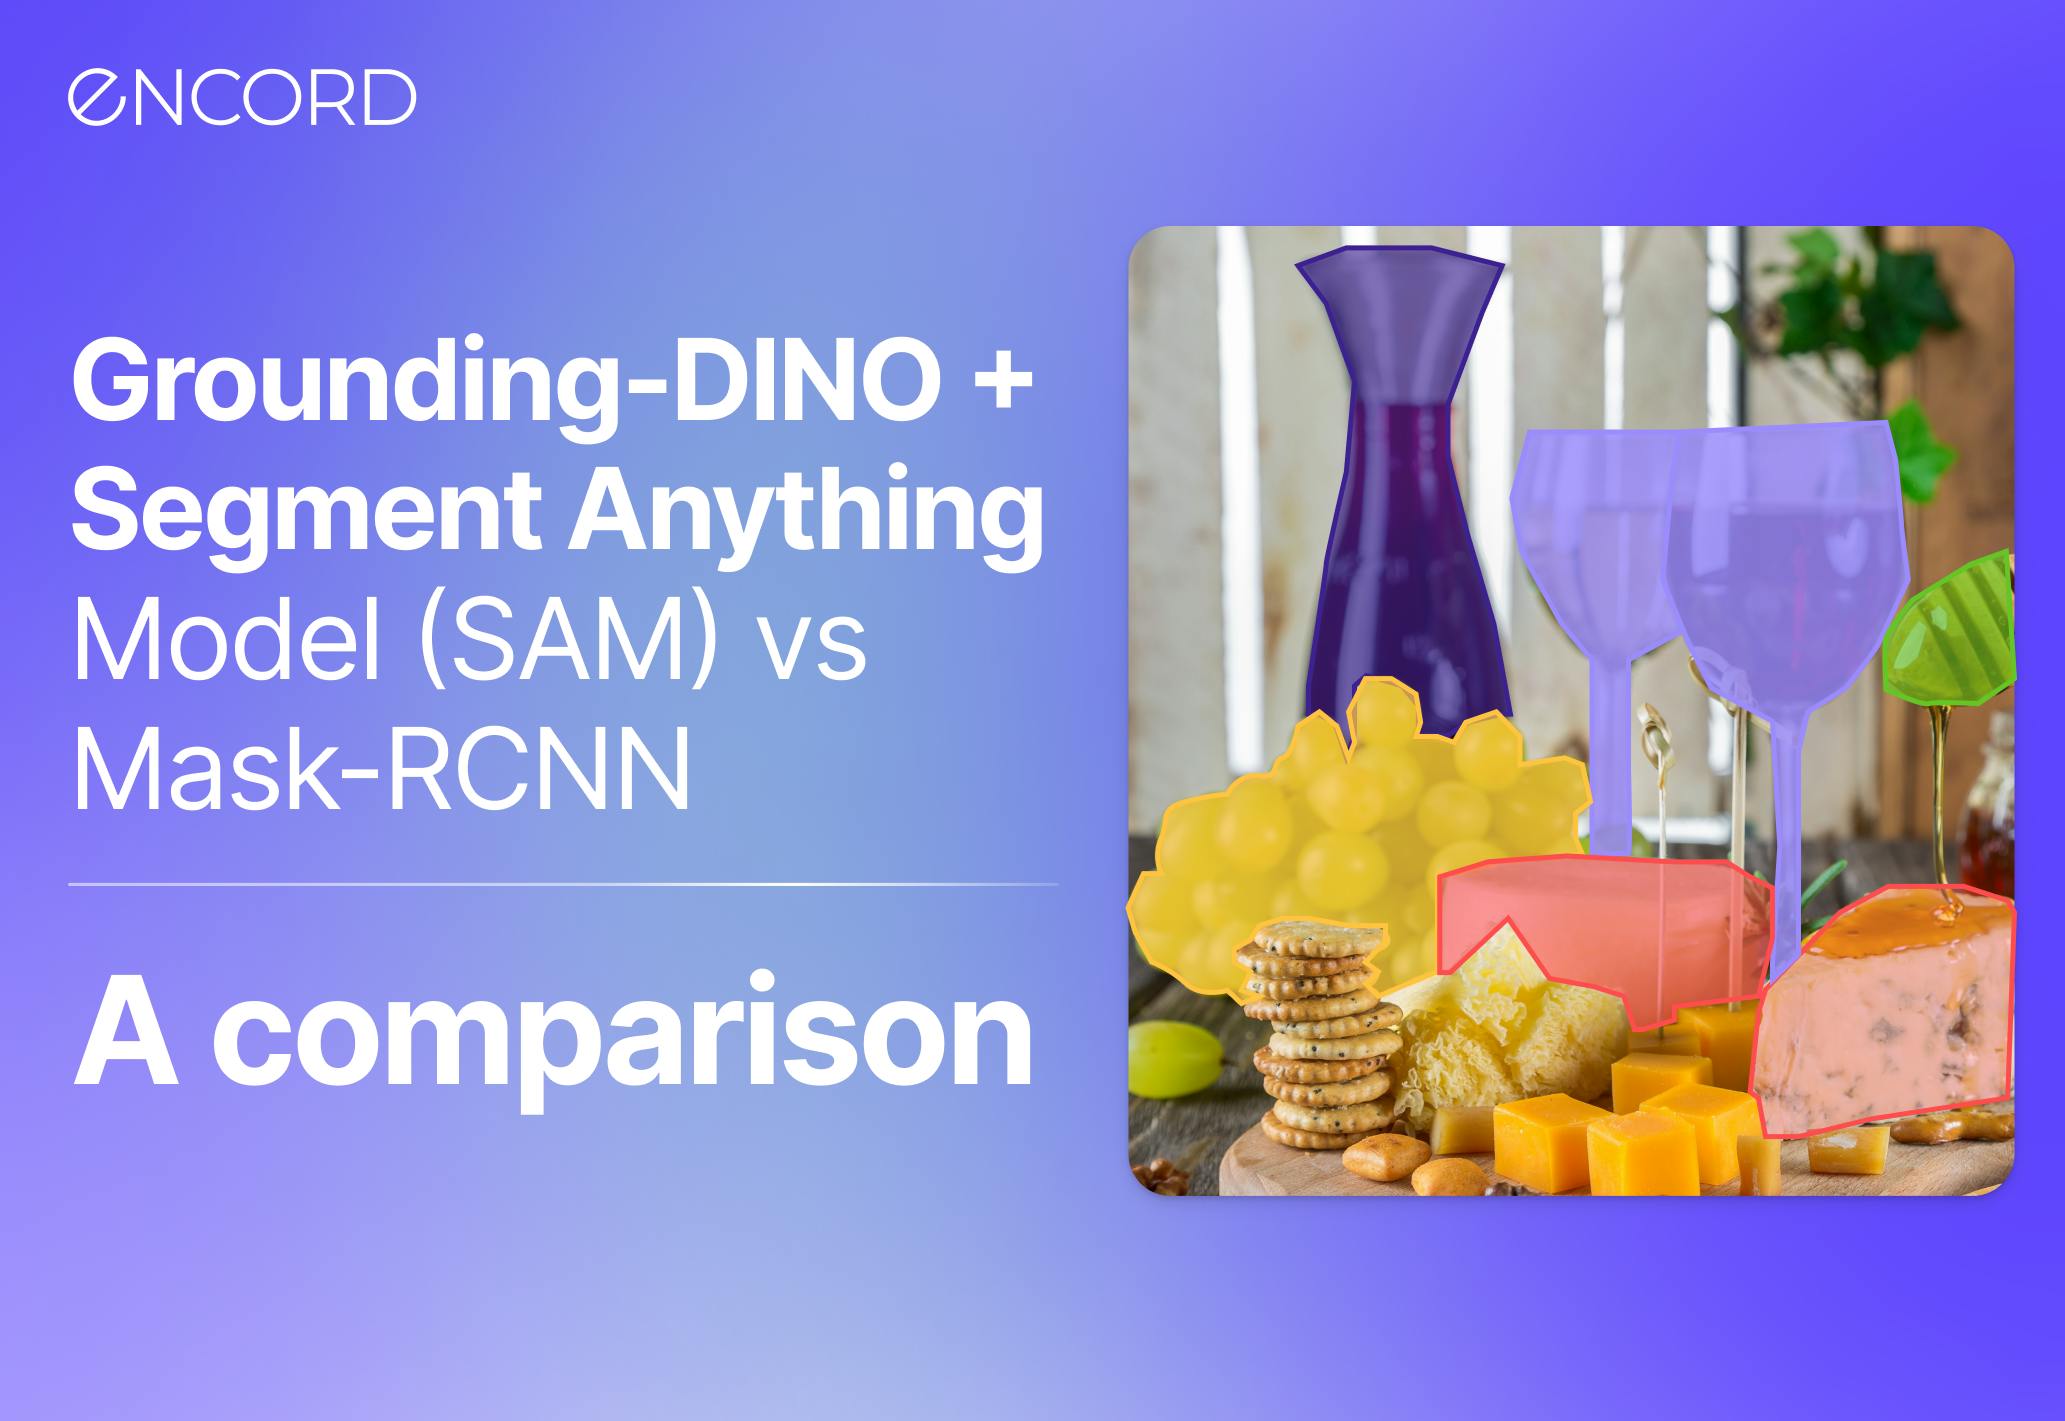 sampleImage_grounding-dino-sam-vs-mask-rcnn-comparison